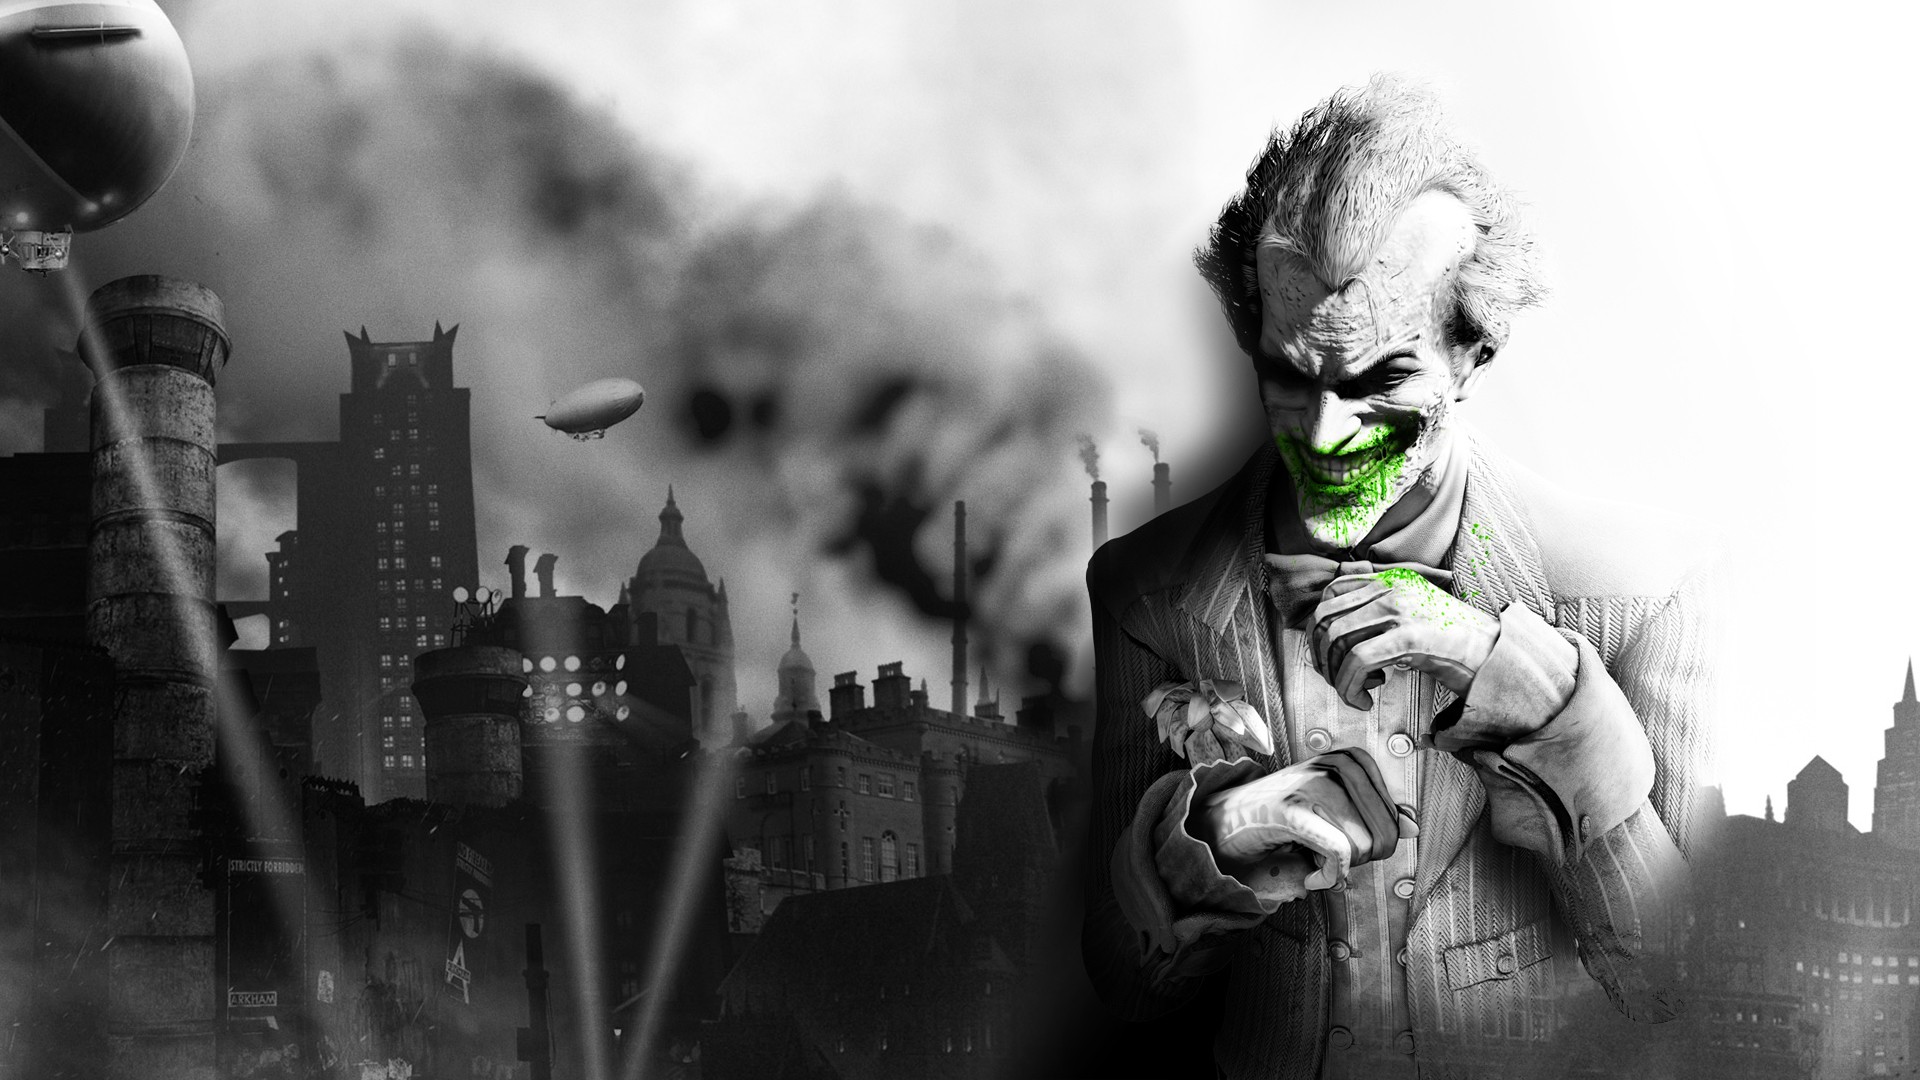 Batman, video games, The Joker, Batman Arkham City - desktop wallpaper